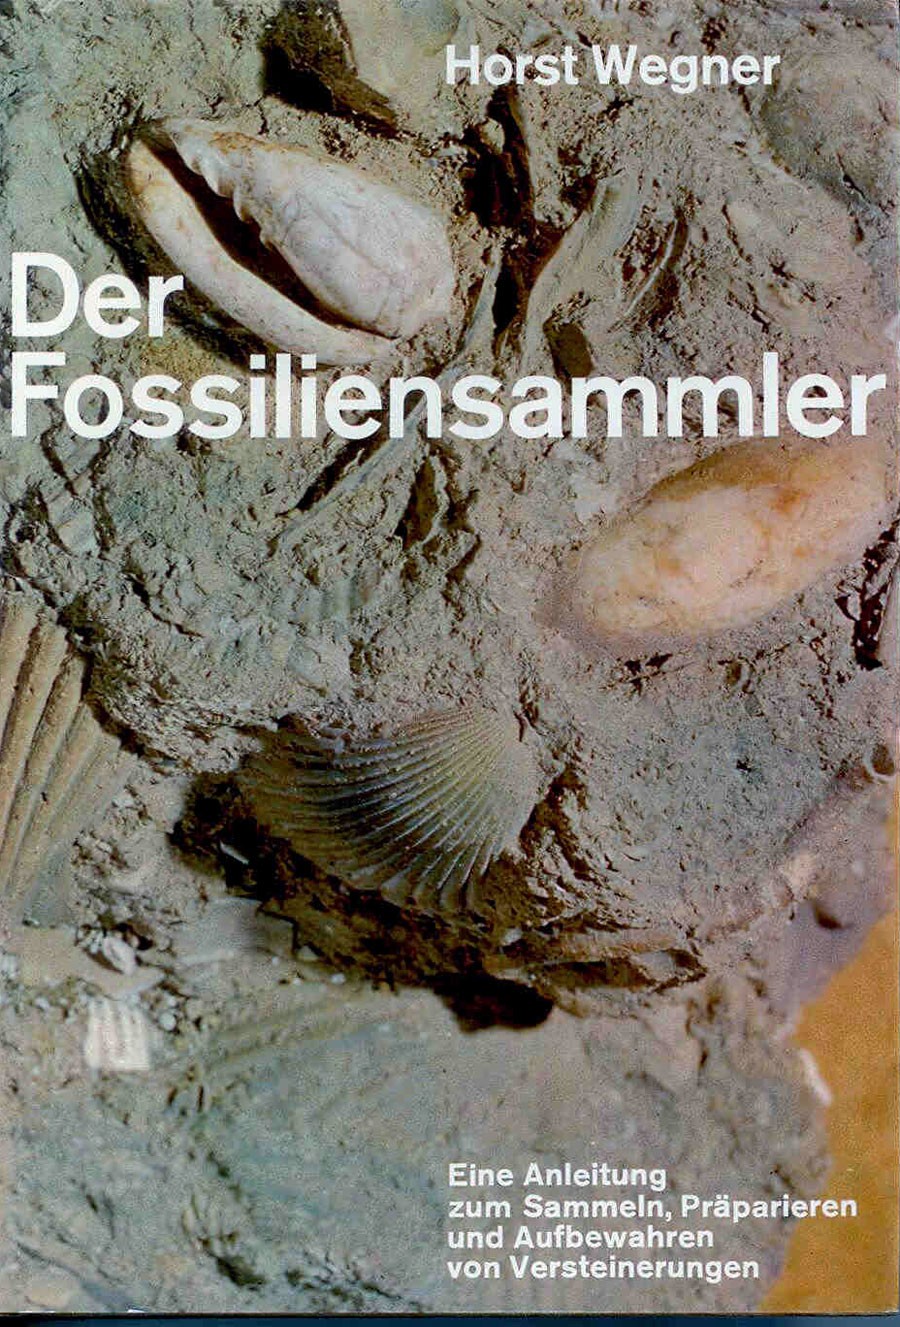 Wegner, Horst: Der Fossiliensammler.